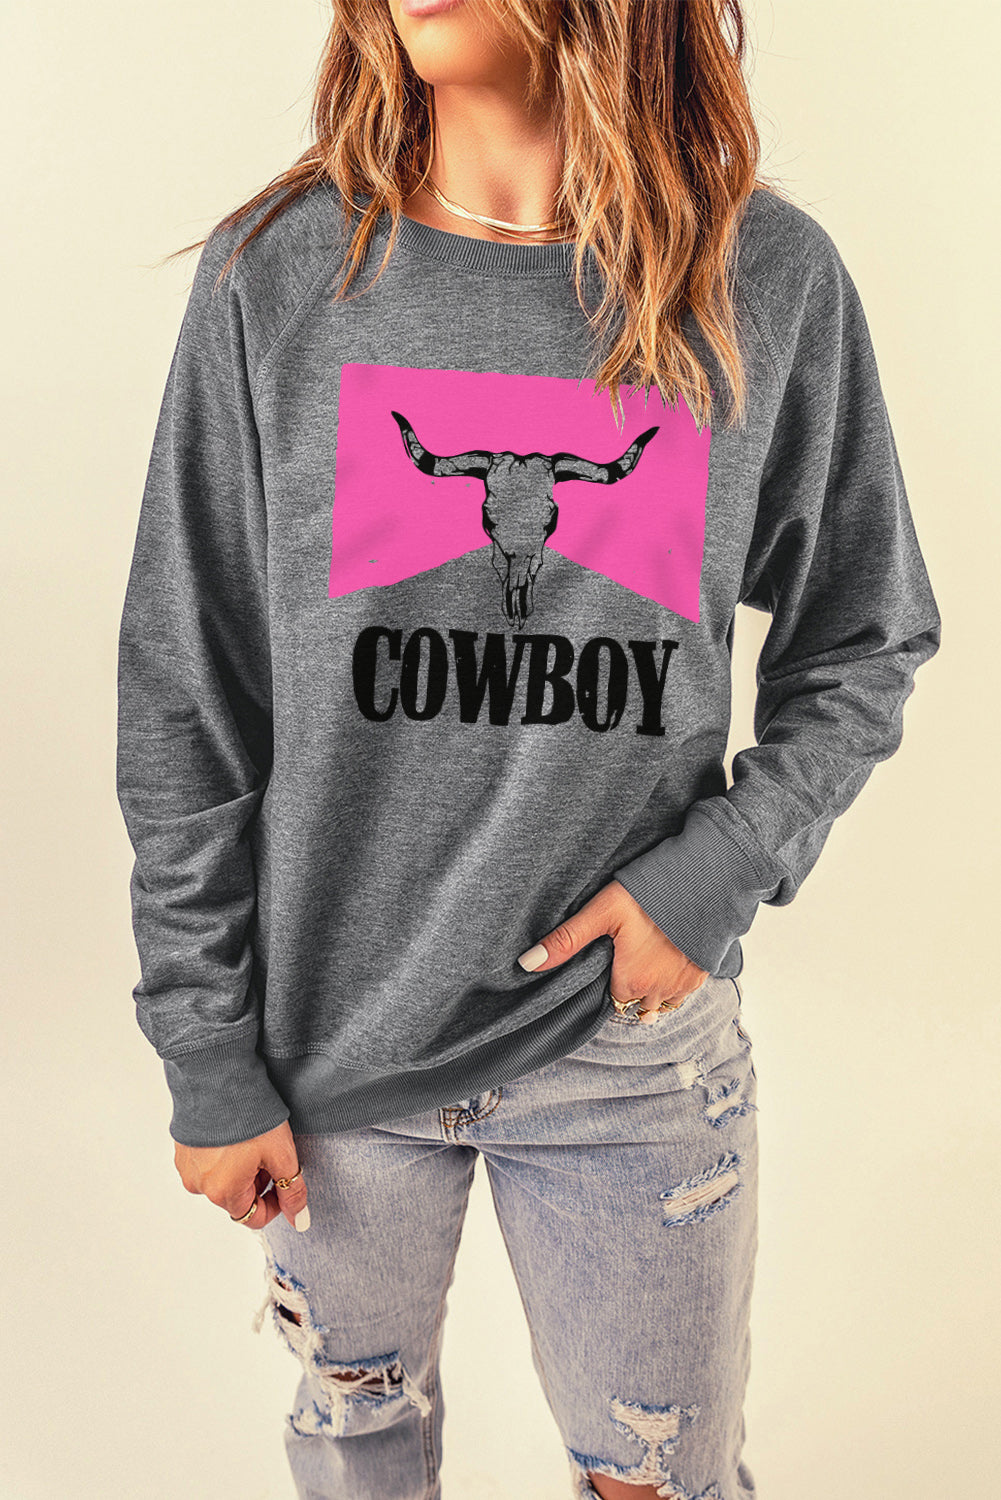 bull shirt sweatshirt